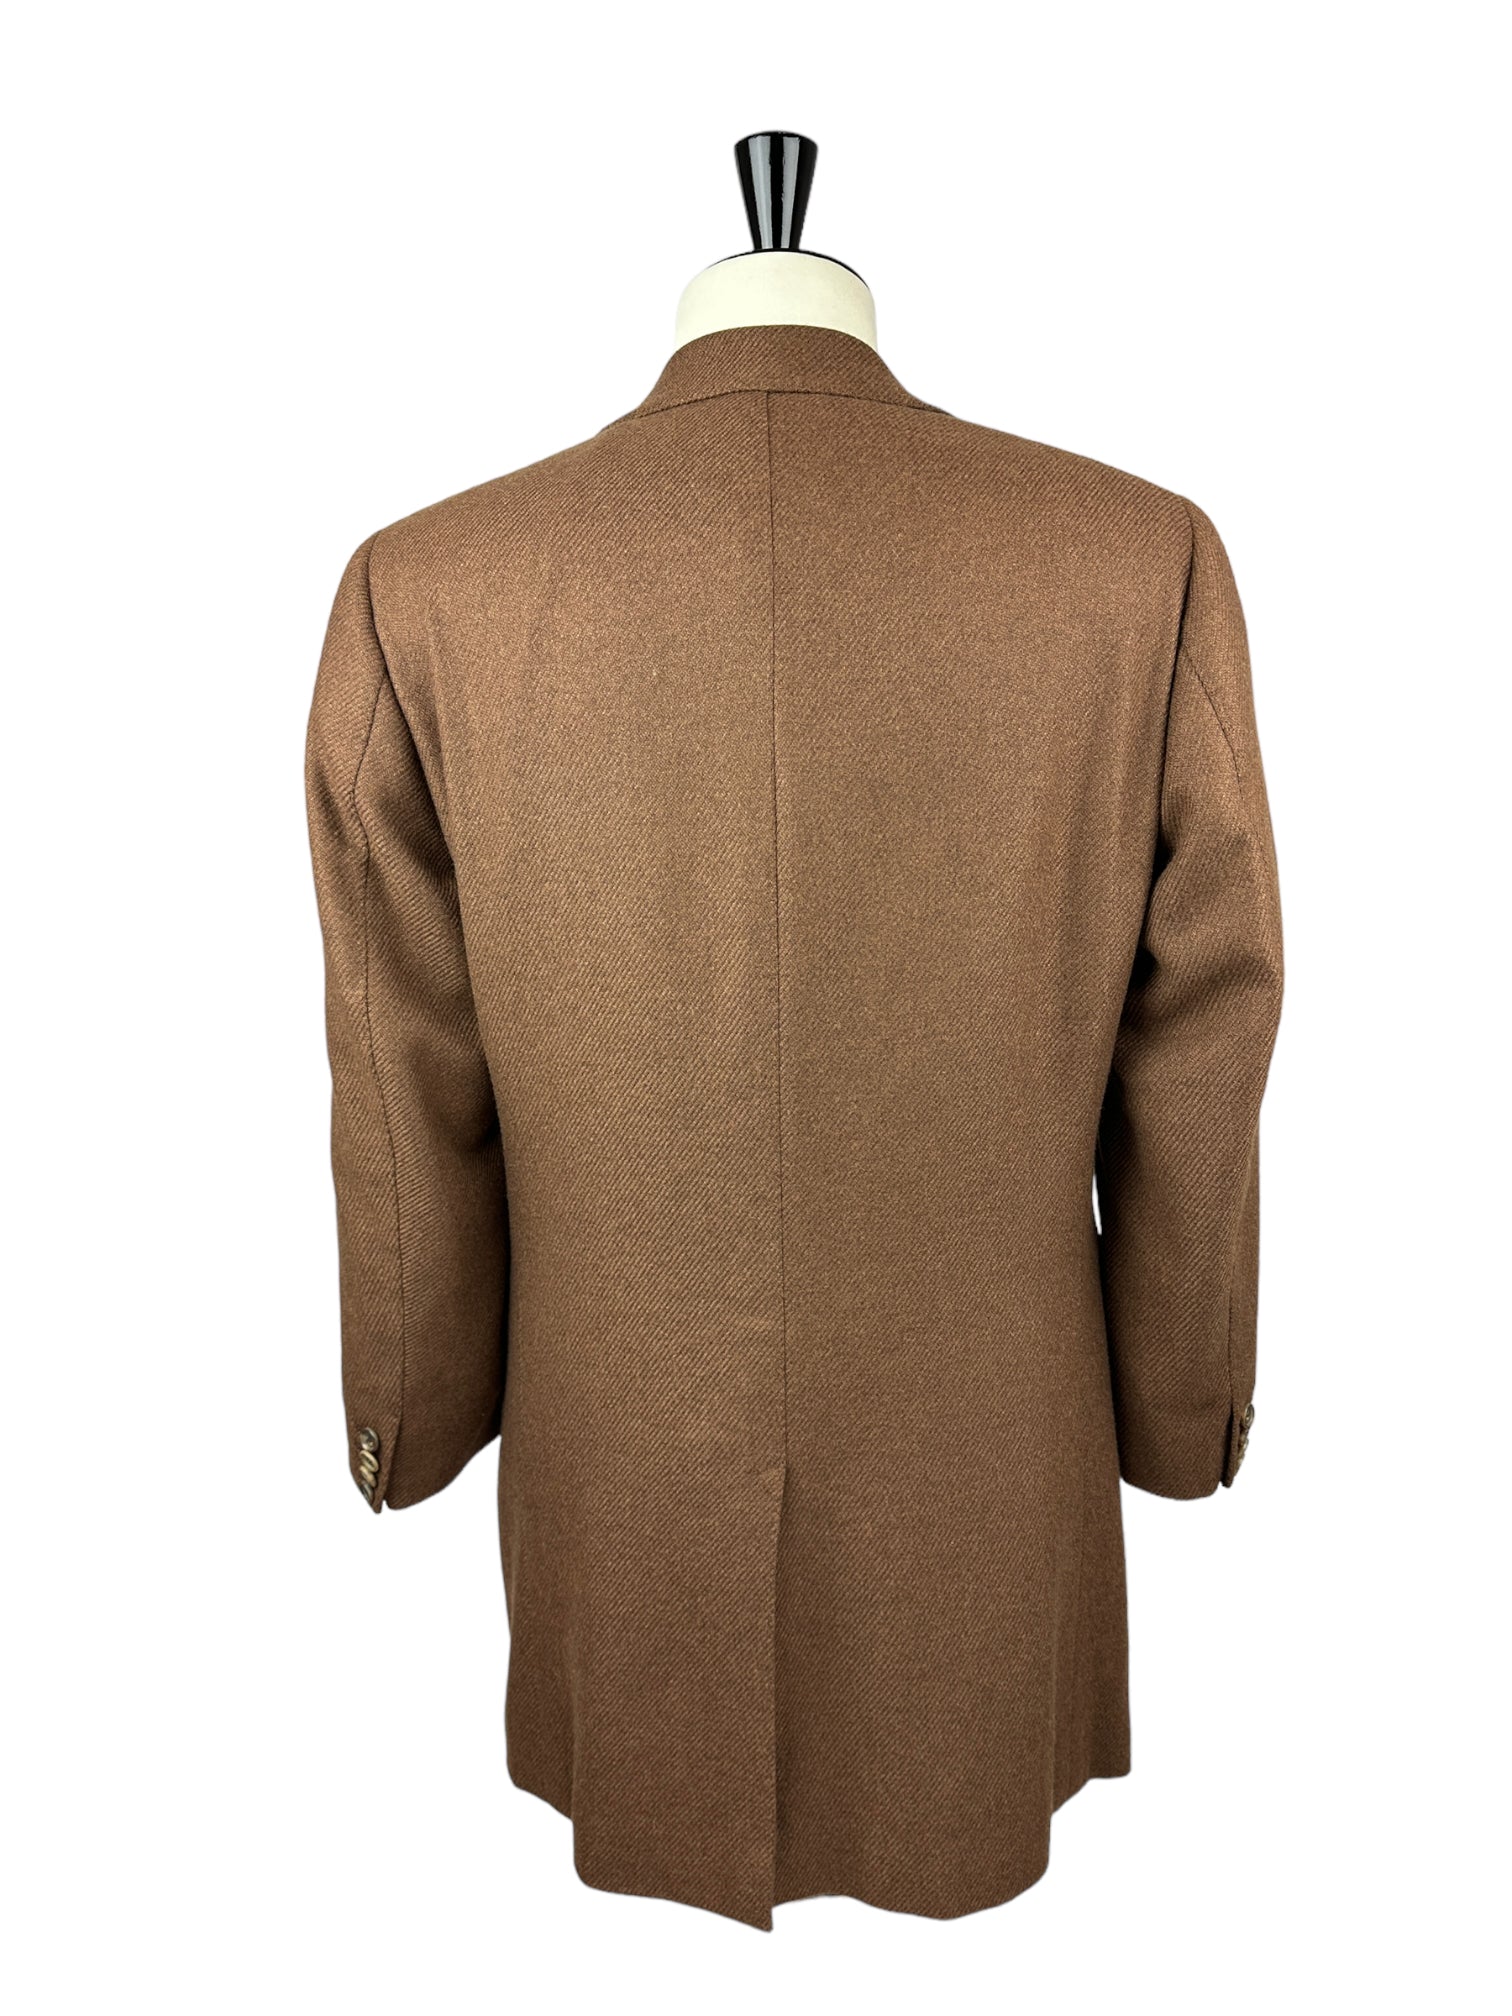 Cesare Attolini Brown Wool & Cashmere Overcoat